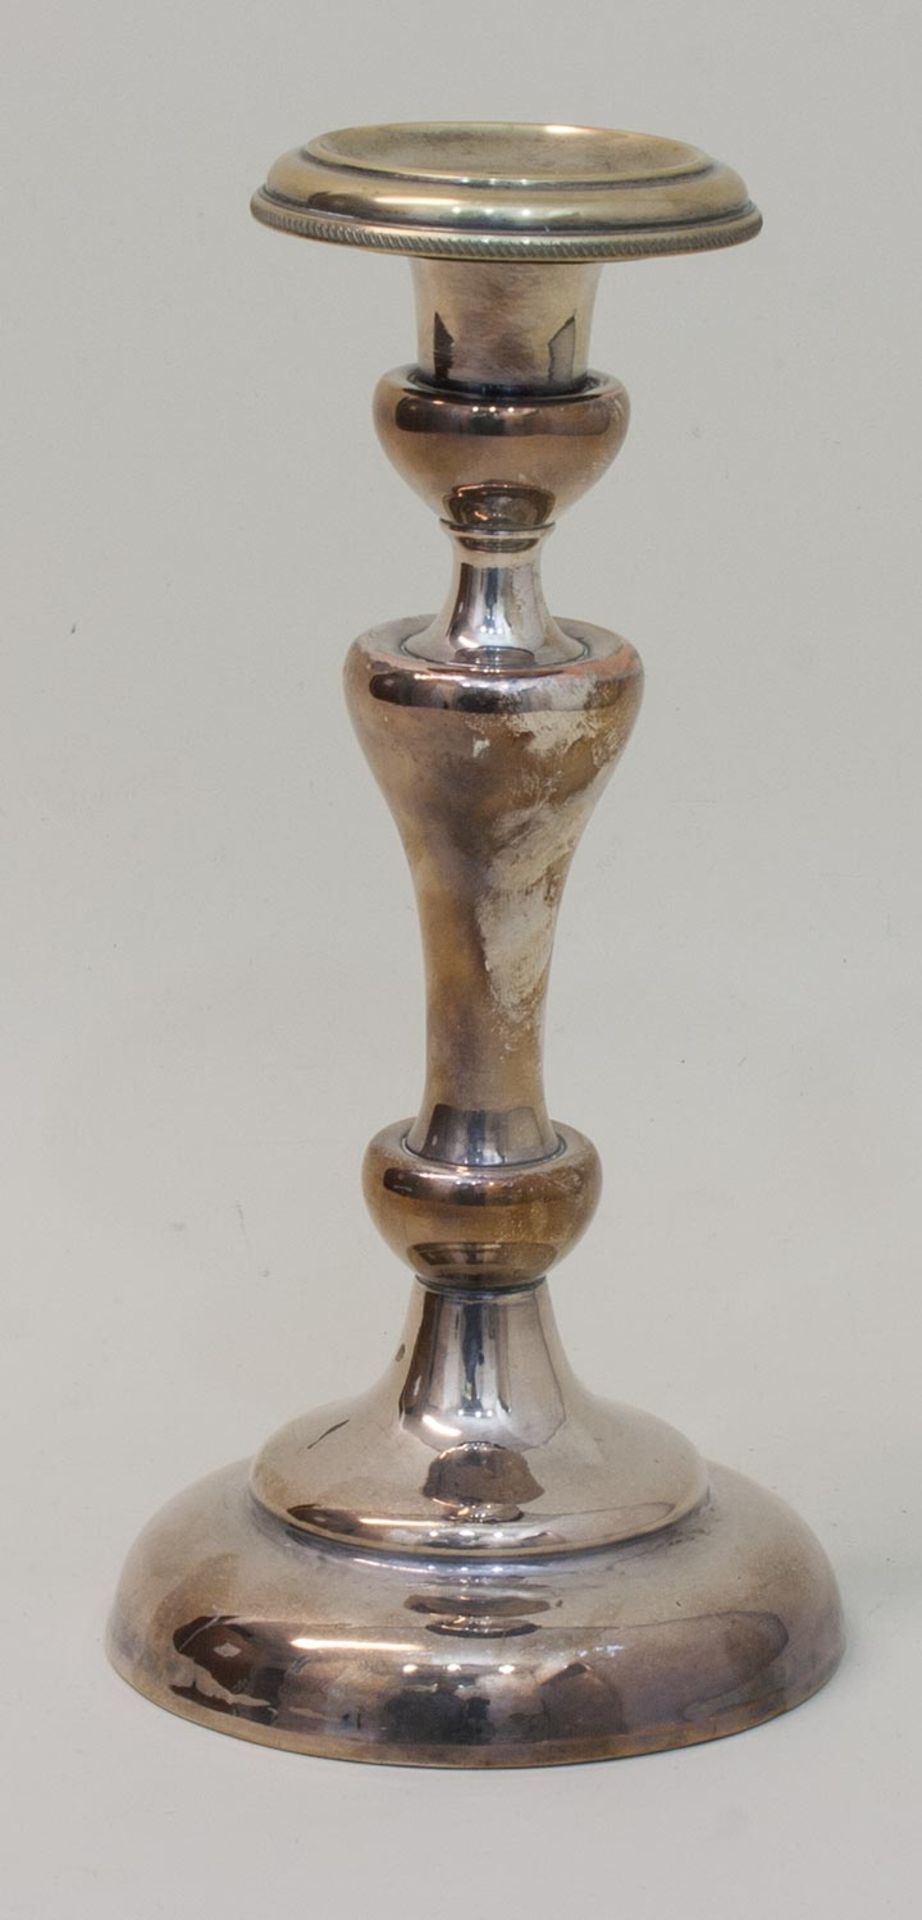 Kerzenleuchterum 1910, versilbert, mehrfach profilierter Schaft, H. 23 cmMindestpreis: 10 EUR